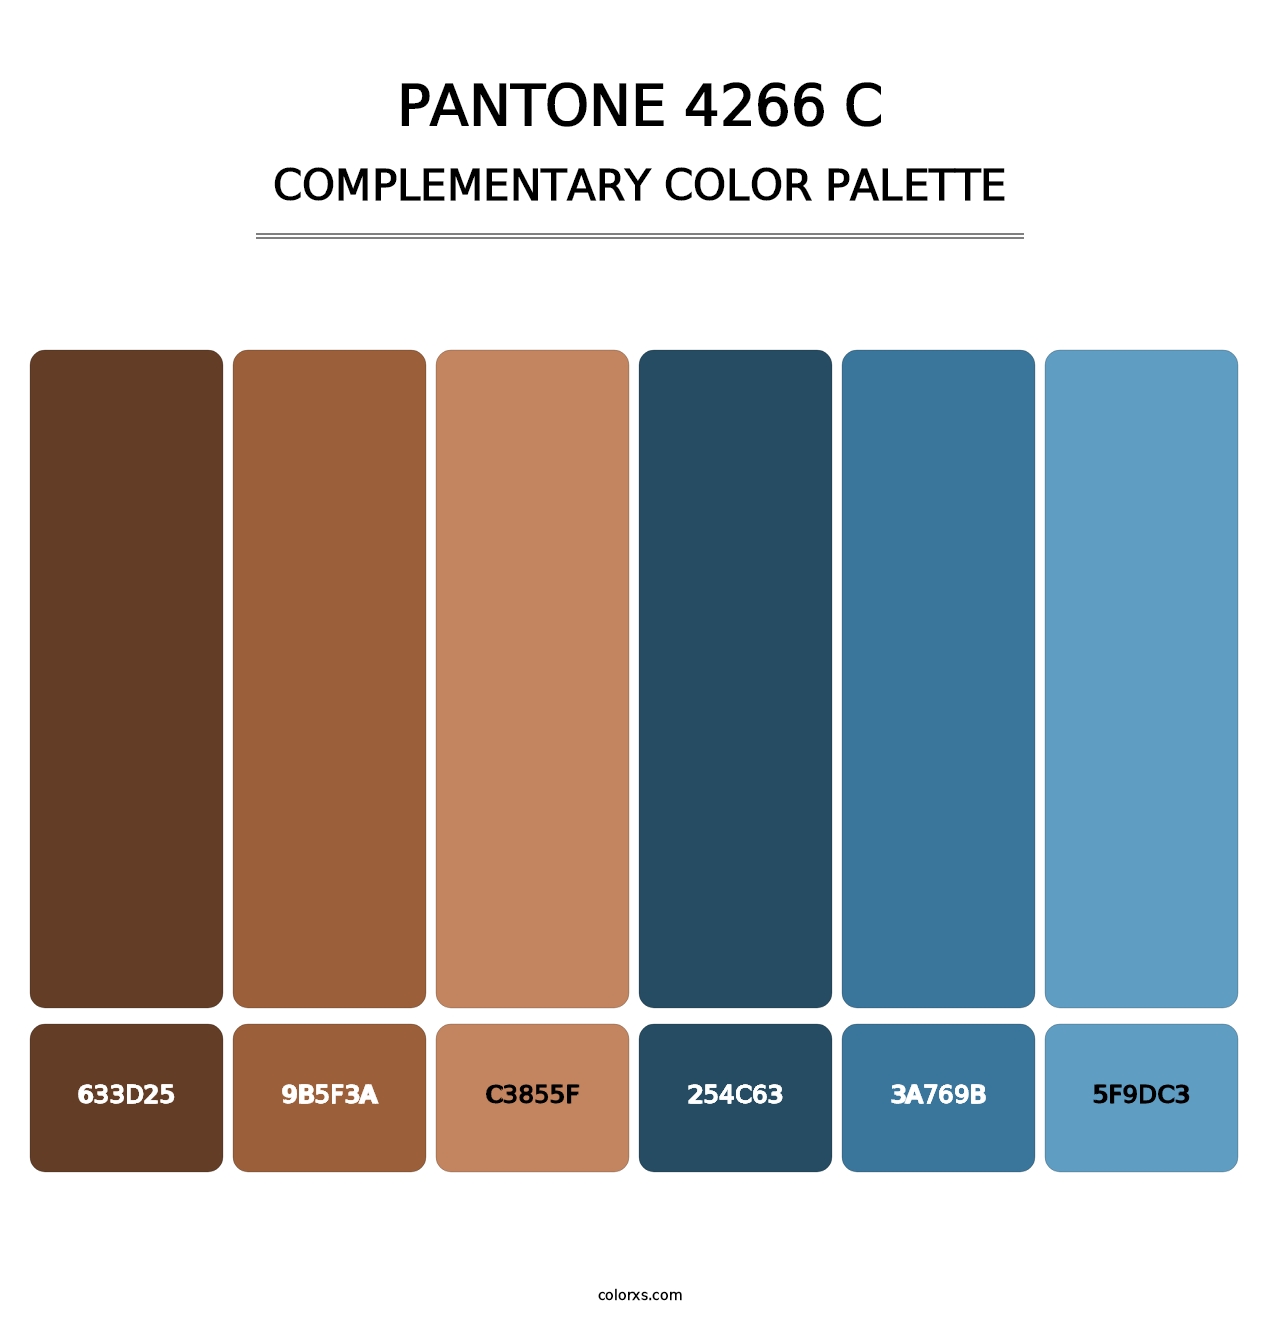 PANTONE 4266 C - Complementary Color Palette